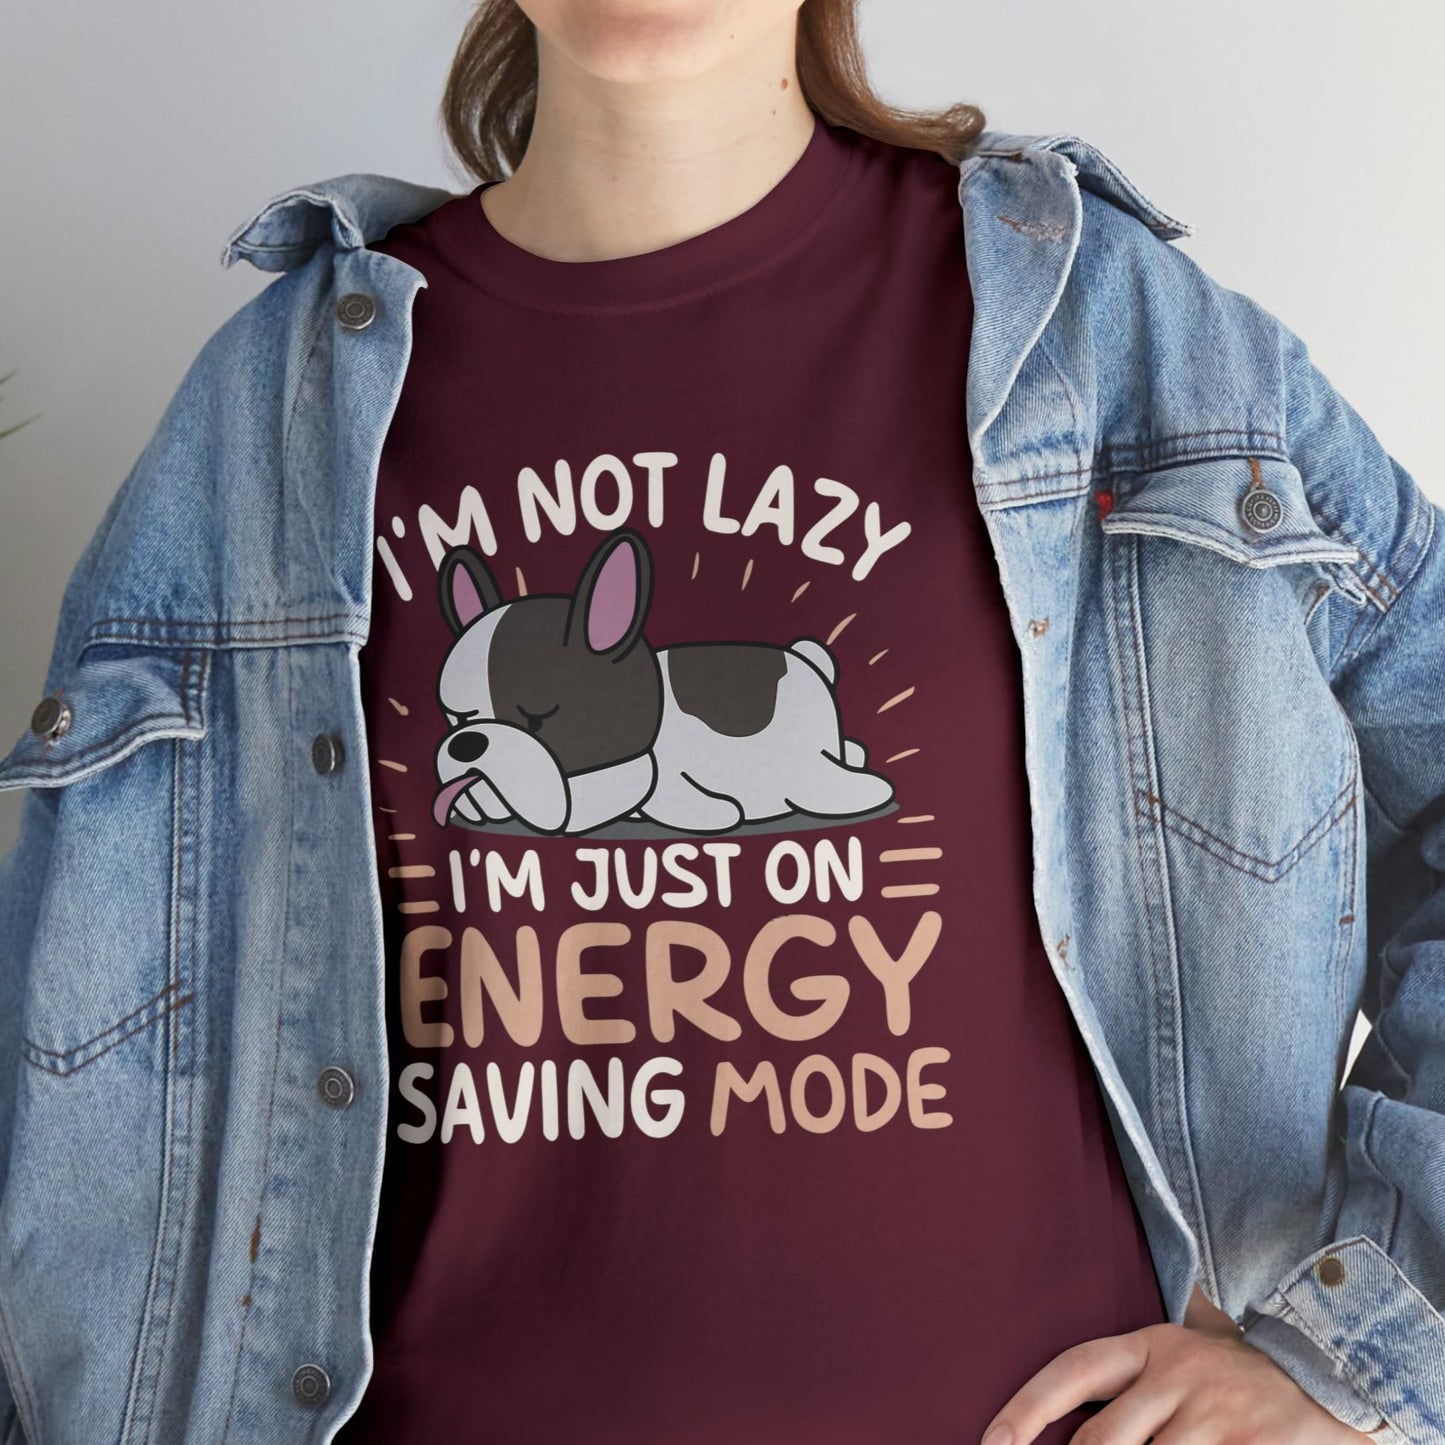 im not lazy - Unisex Cotton T-Shirt